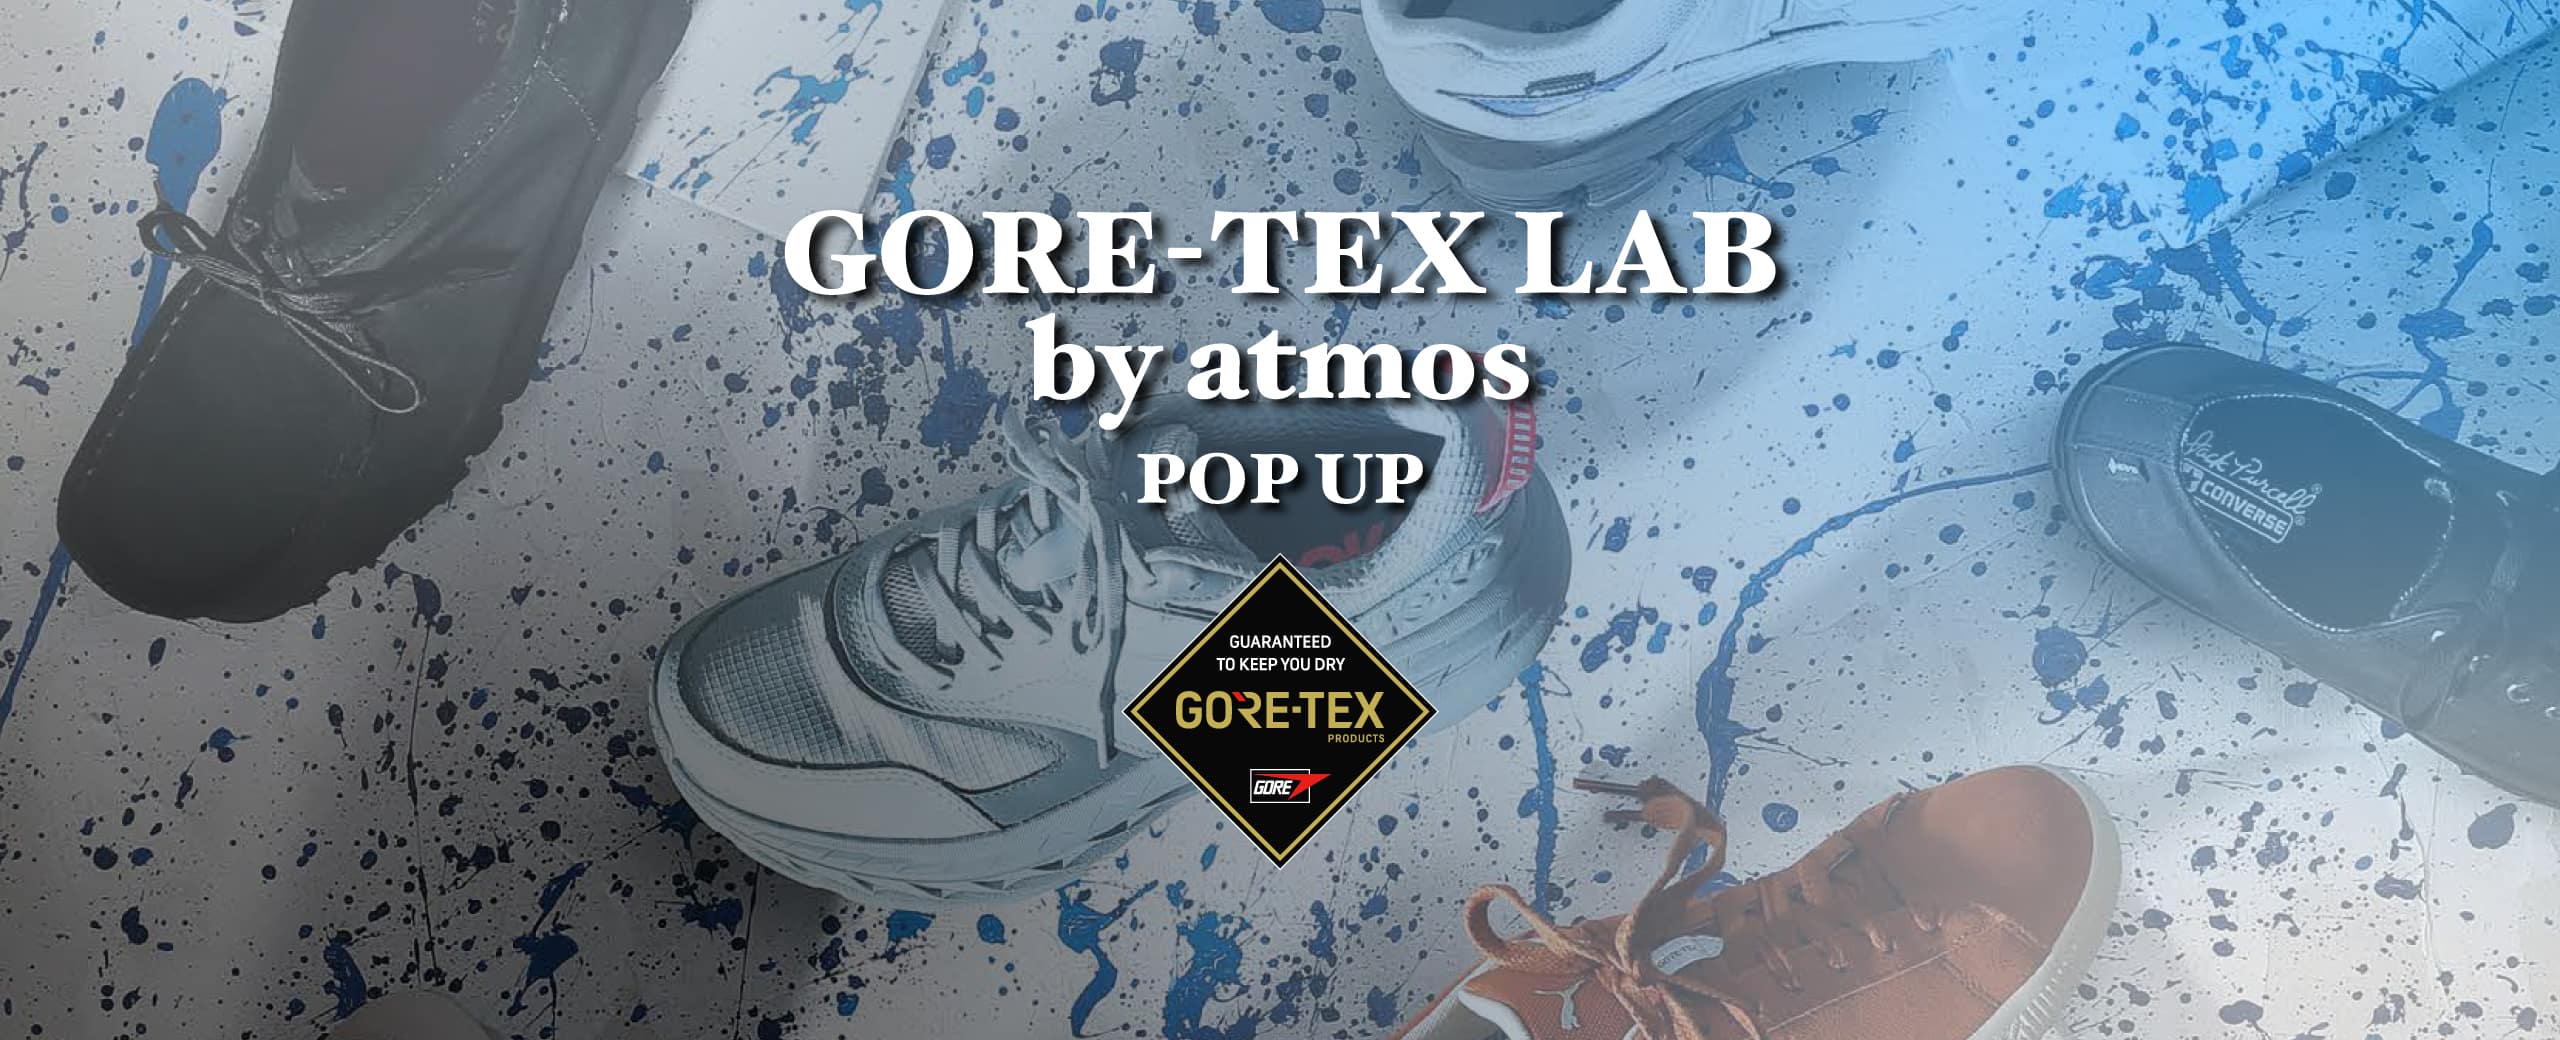 "GORE-TEX Lab by atmos"